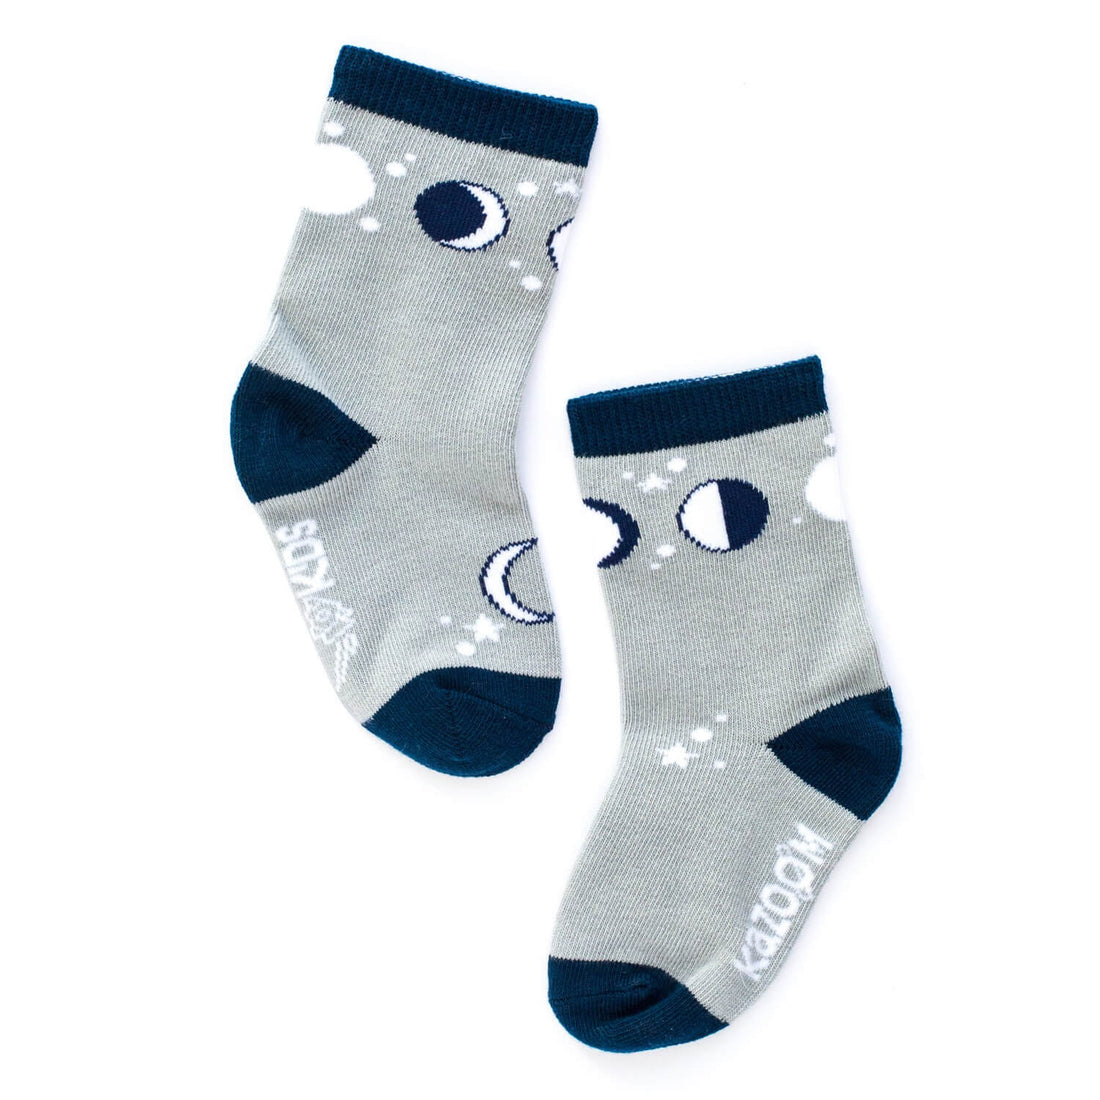 Toddler Socks with stars